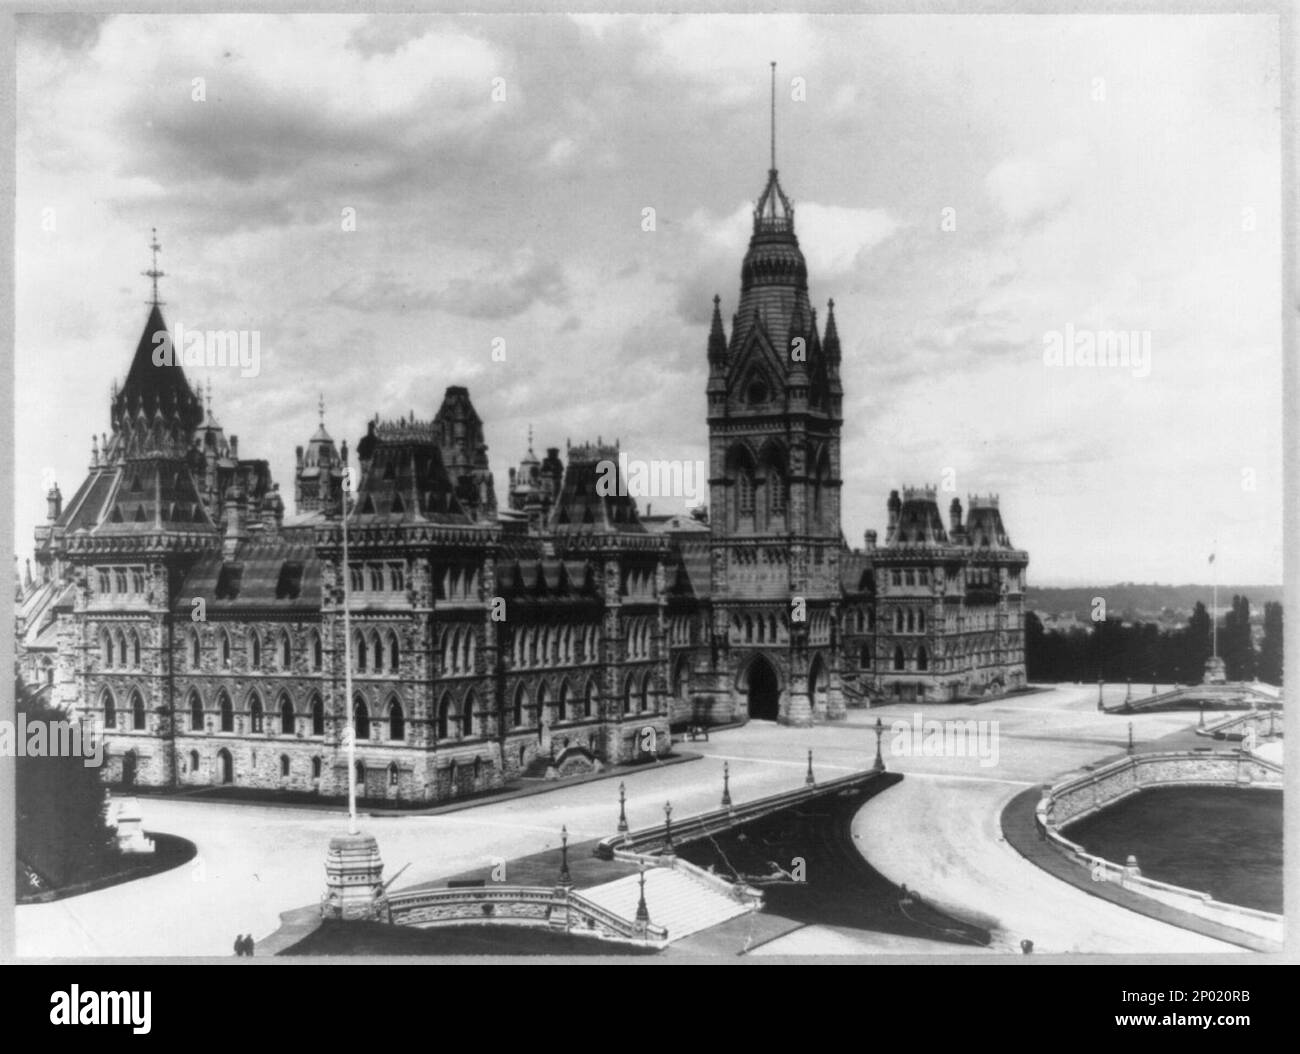 Parlamentsgebäude, Ottawa, Kanada, vor 1927. Frank and Frances Carpenter Collection , Kanada,Parlament,Gebäude,Kanada,Ottawa,1900-1930, Capitols,Kanada,Ottawa,1900-1930. Stockfoto